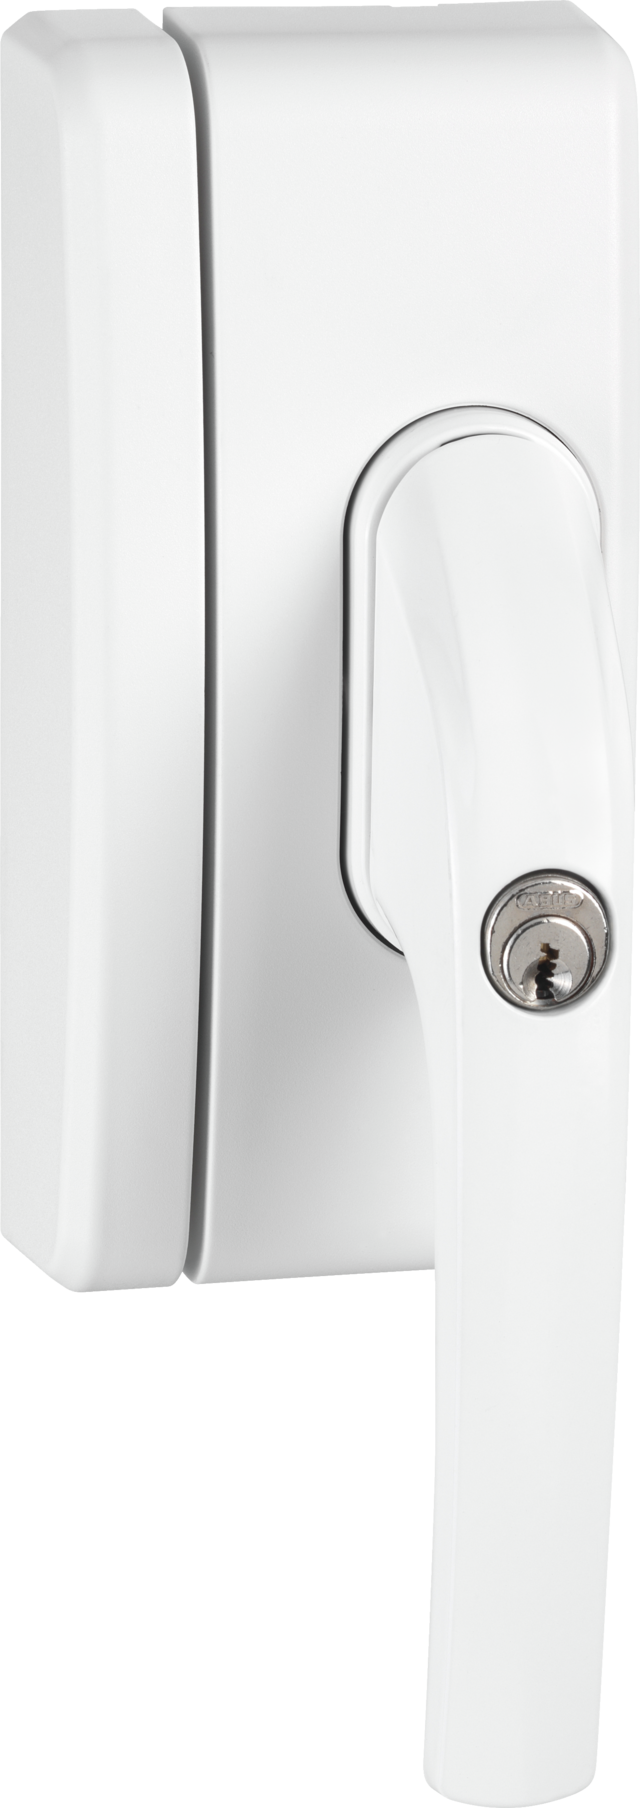 Secvest wireless window handle lock FO 400 E - AL0089 (white) front view right